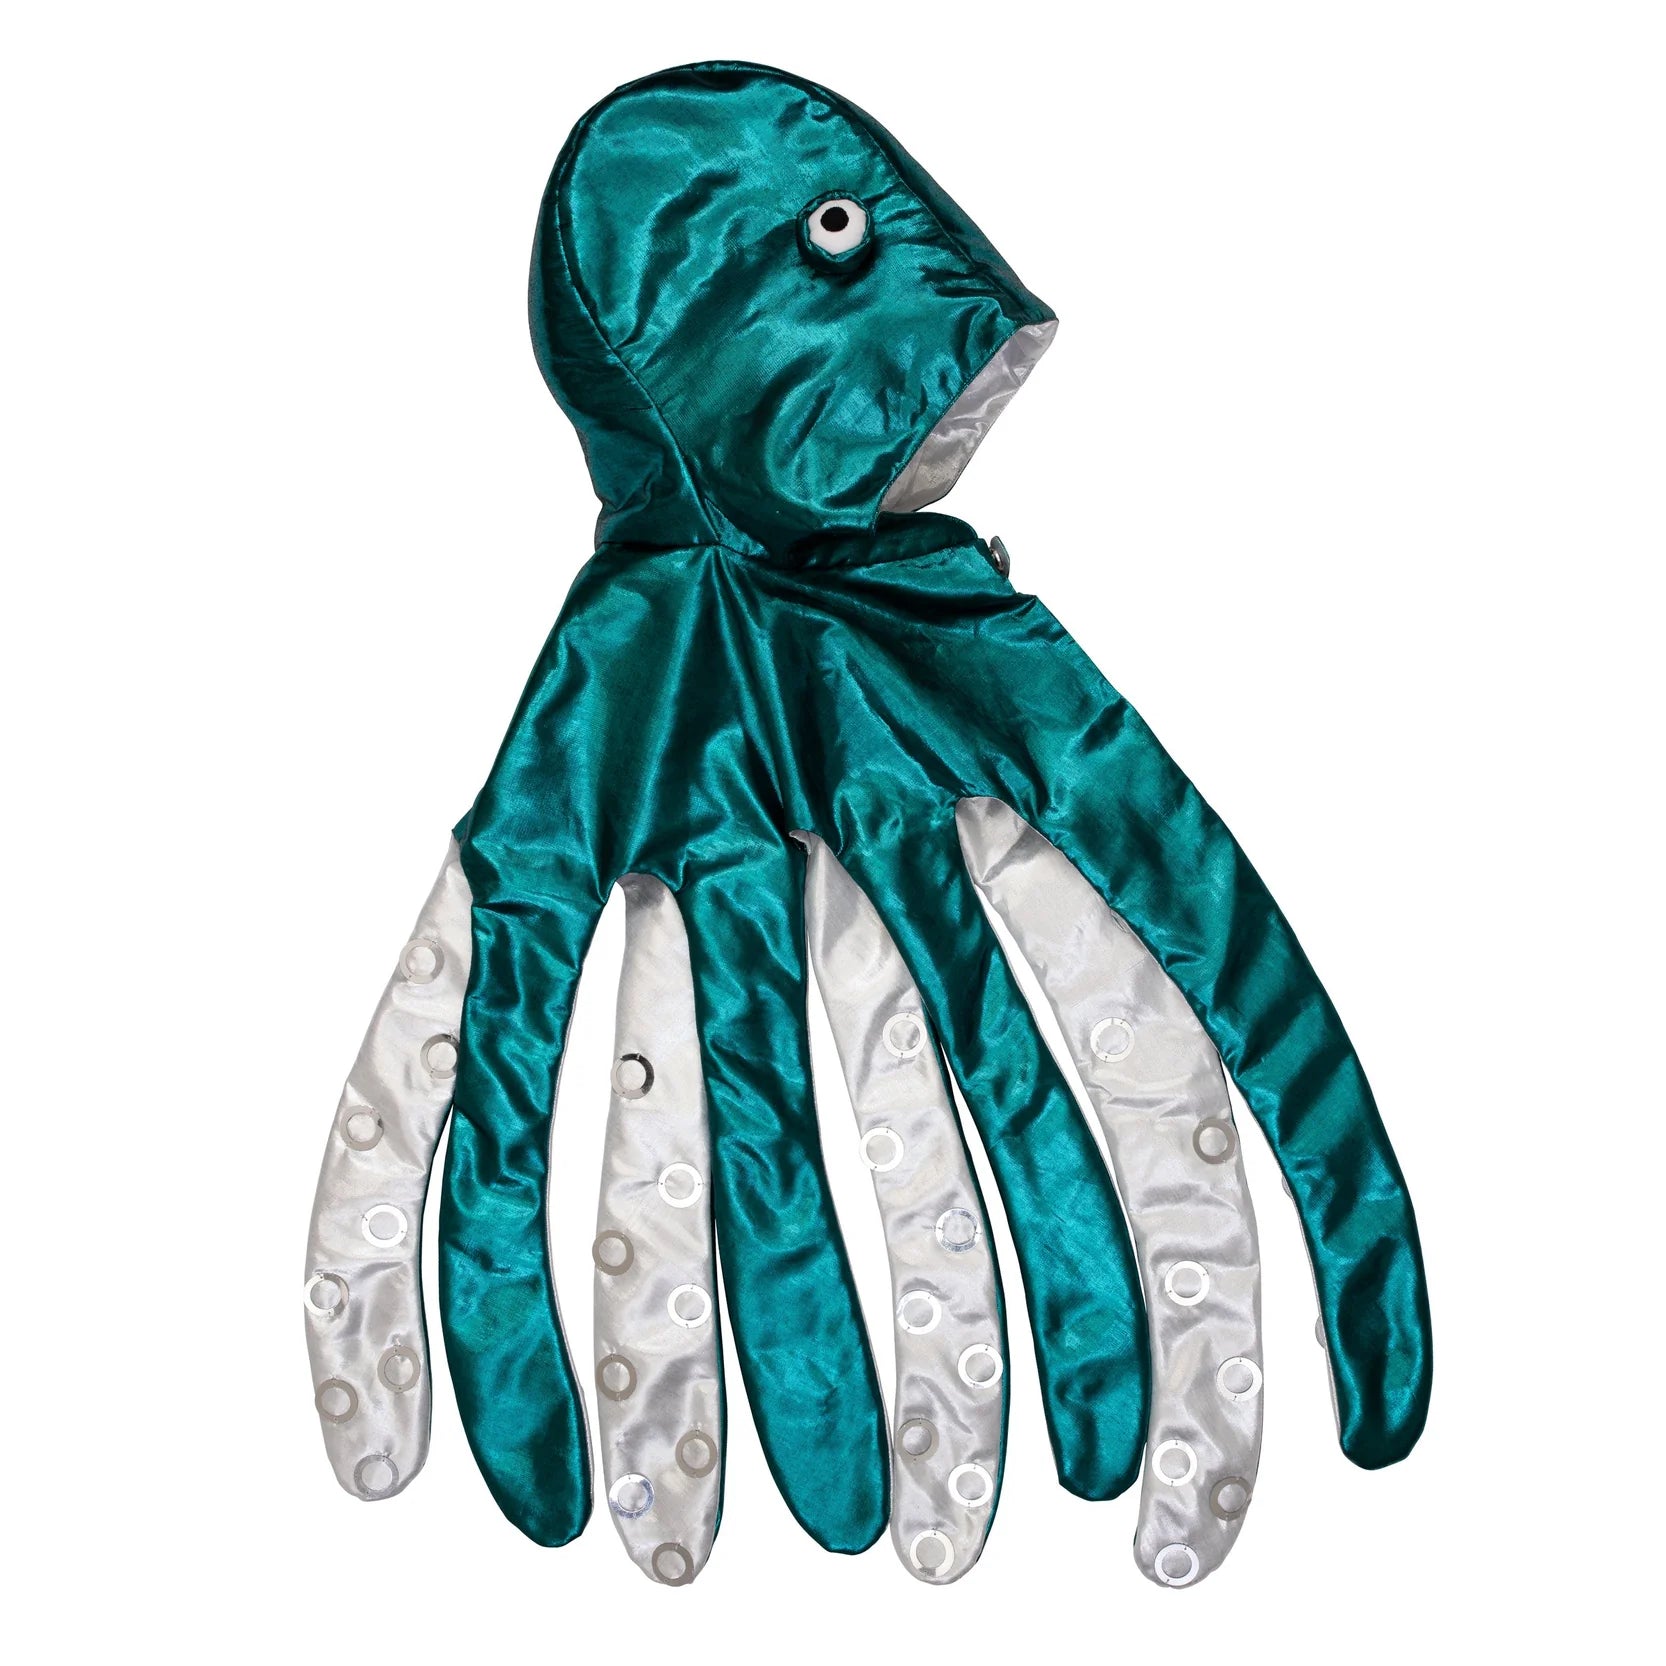 Octopus Dress Up Costume